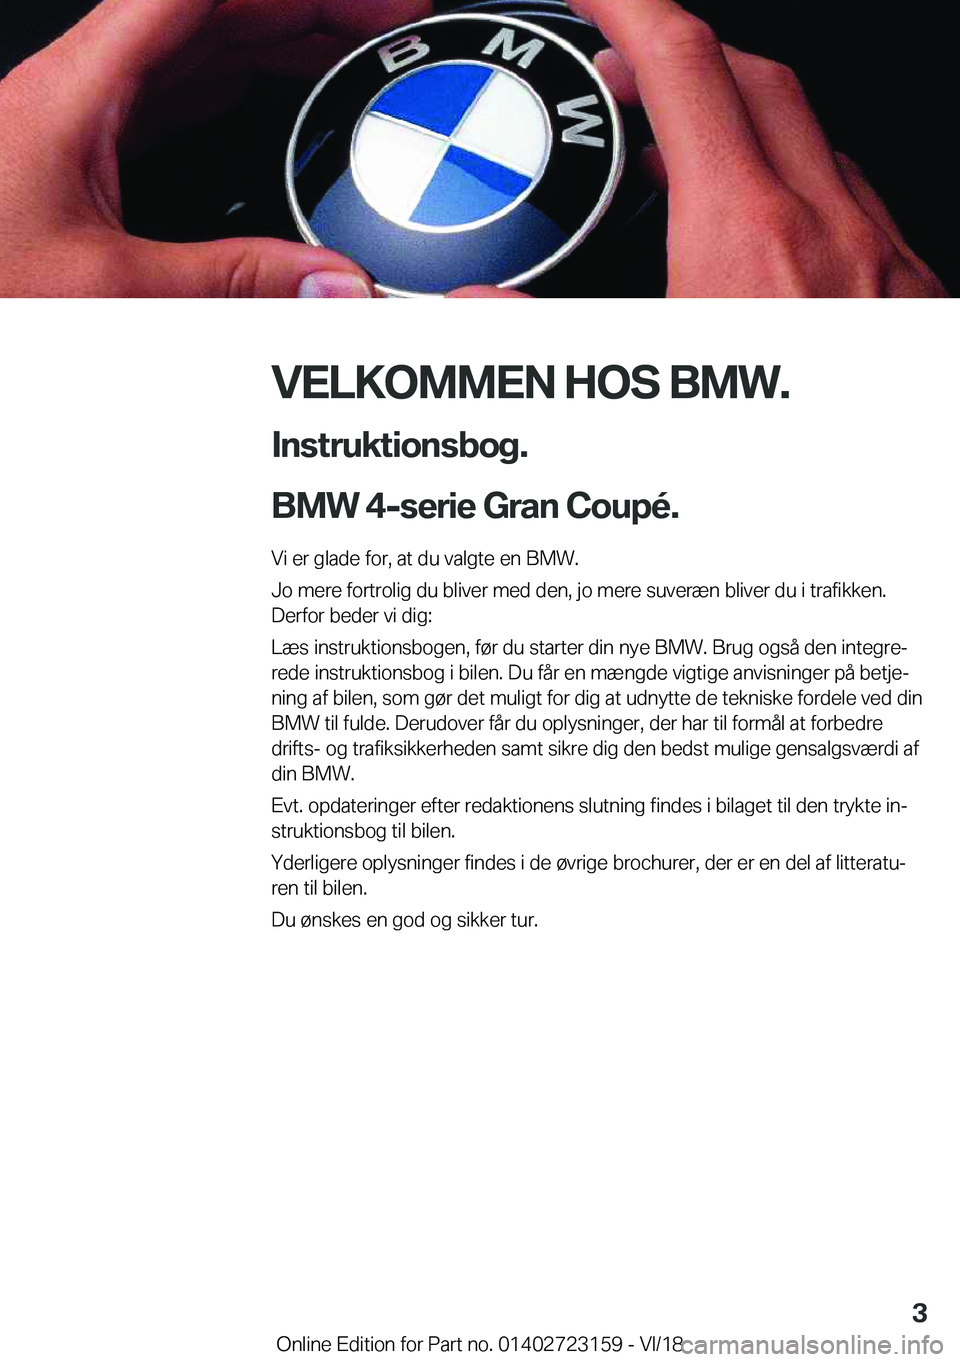 BMW 4 SERIES GRAN COUPE 2019  InstruktionsbØger (in Danish) �V�E�L�K�O�M�M�E�N��H�O�S��B�M�W�.
�I�n�s�t�r�u�k�t�i�o�n�s�b�o�g�.
�B�M�W��4�-�s�e�r�i�e��G�r�a�n��C�o�u�p�